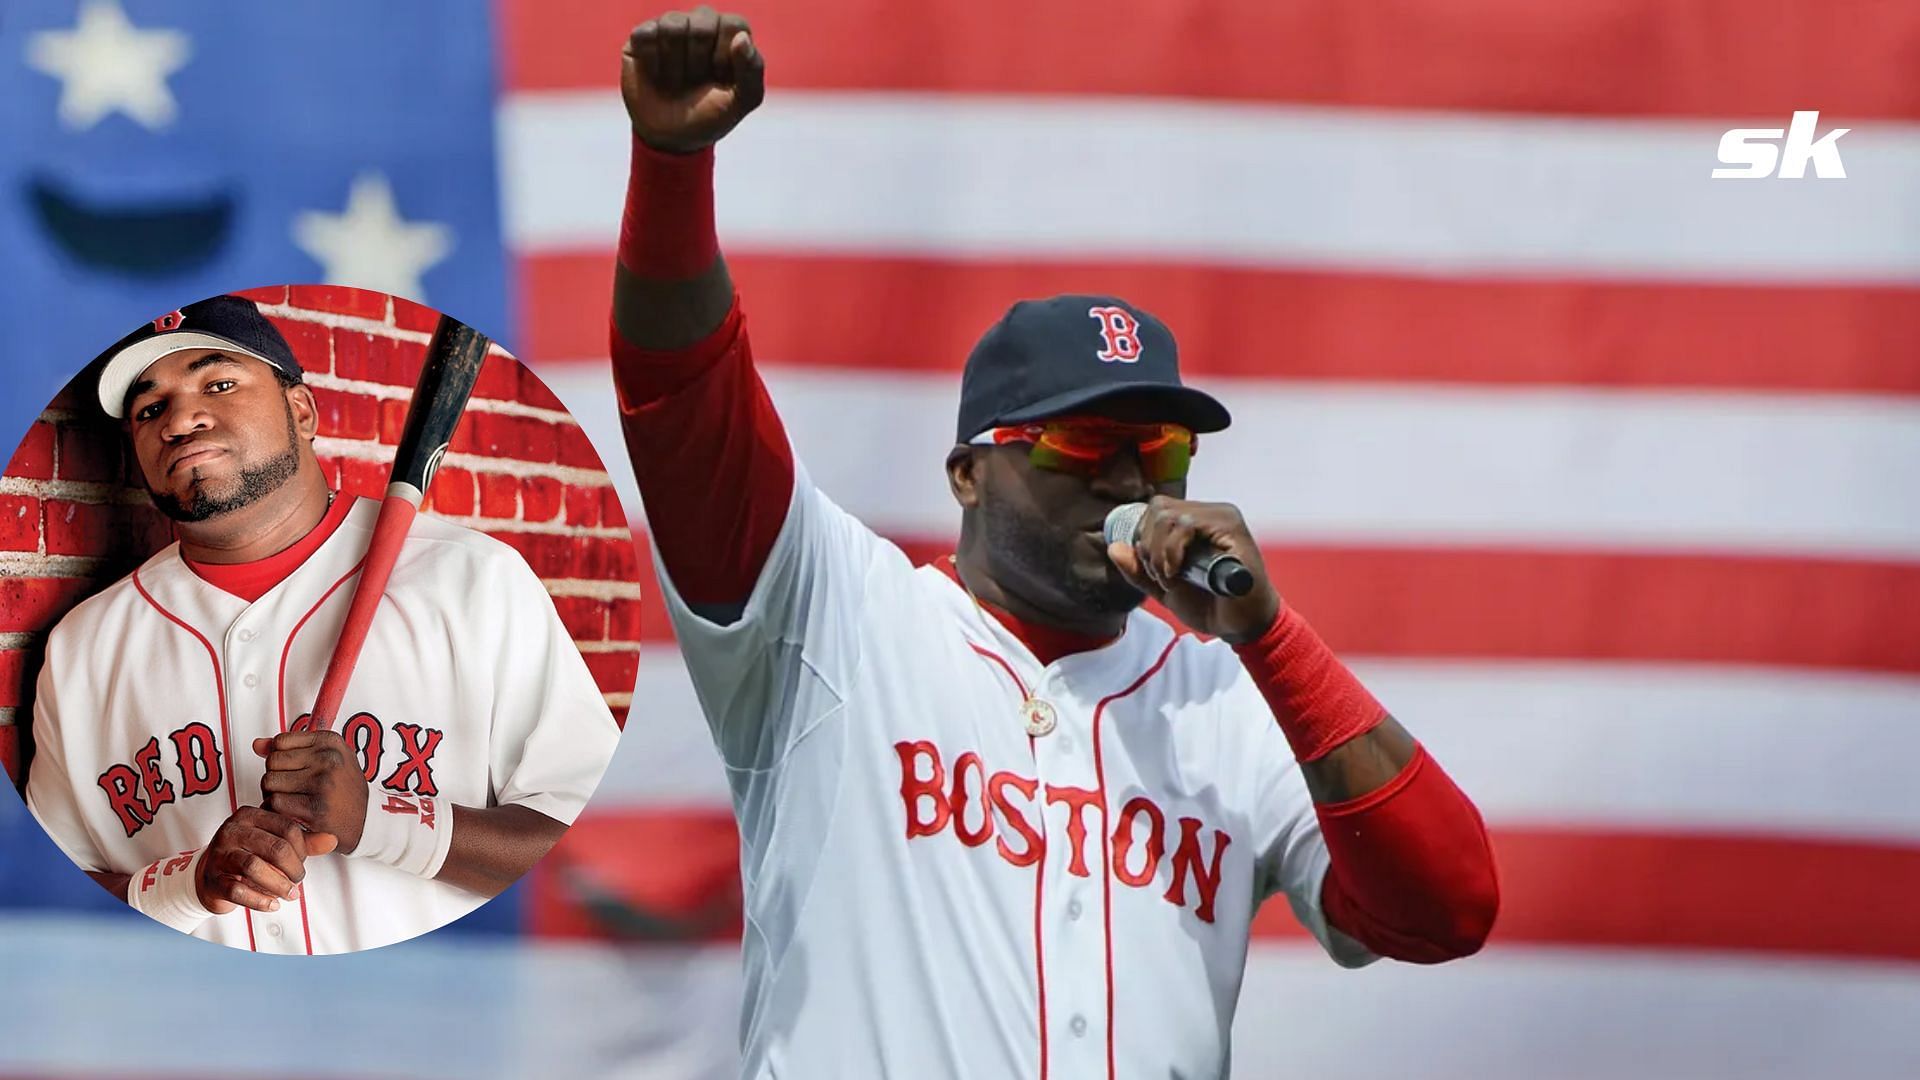 American League's David Ortiz, of the Boston Red Sox, prepares to